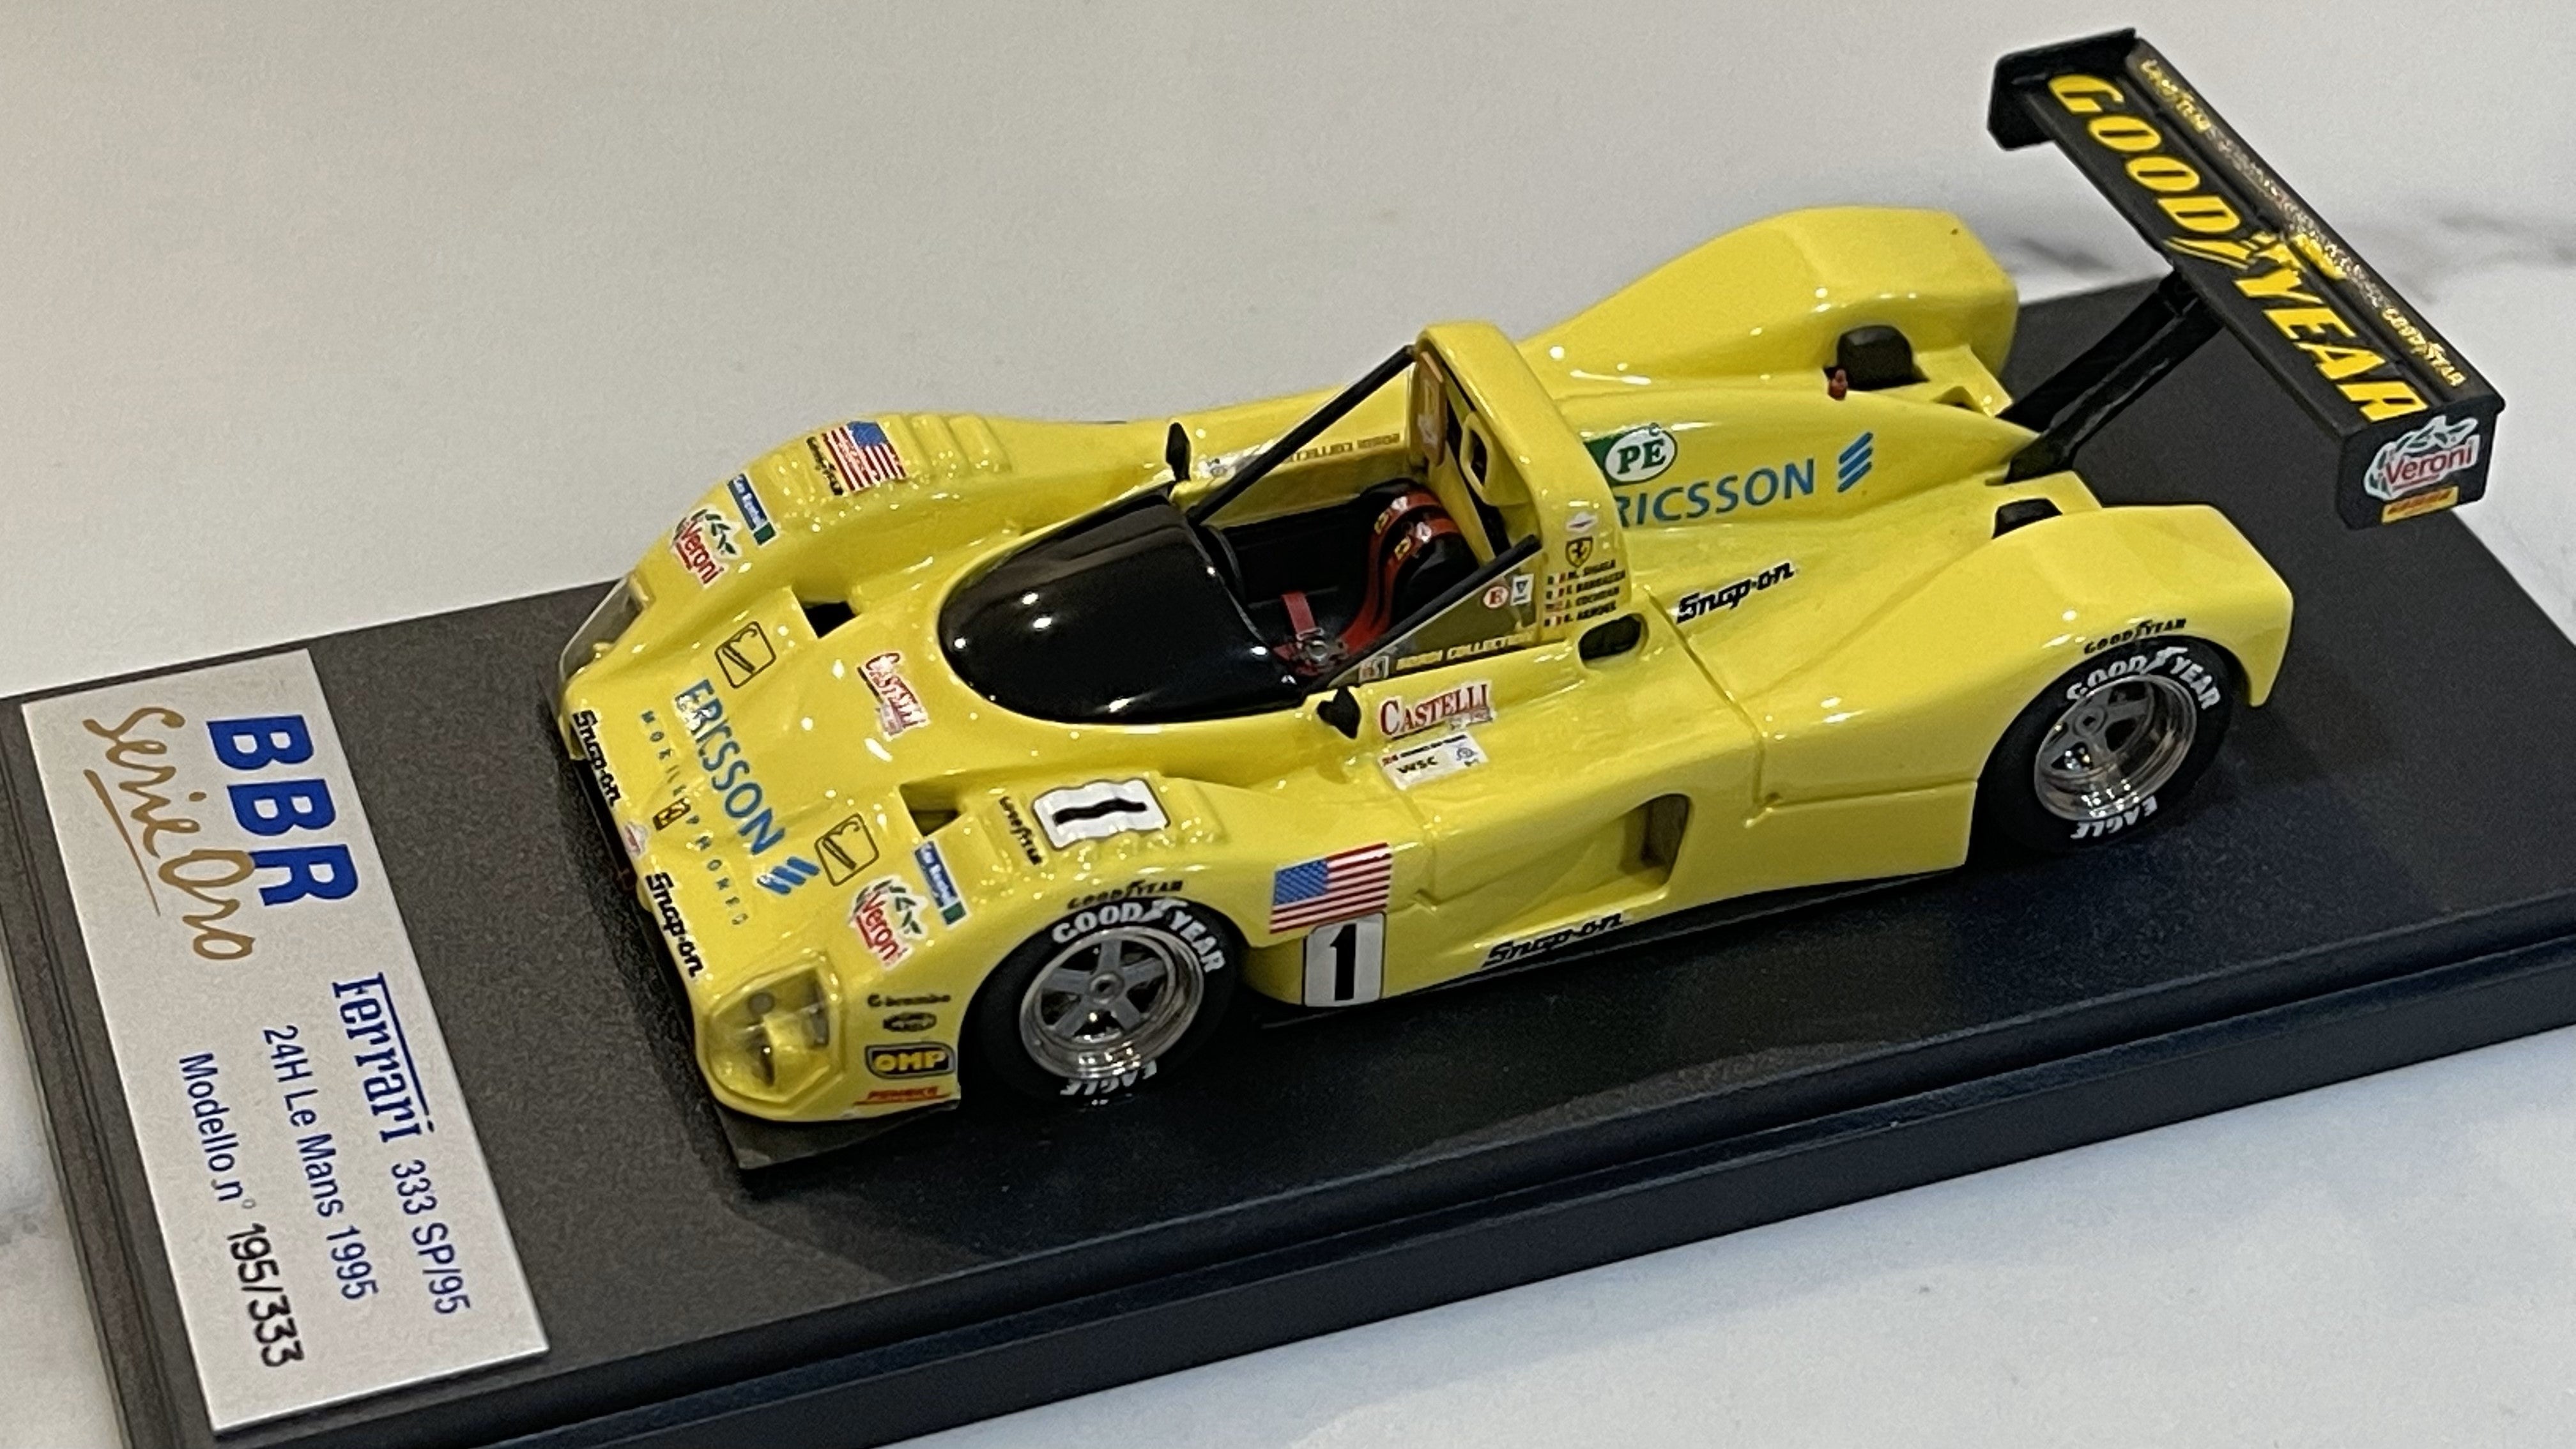 BBR 1/43 Ferrari 333 SP/95 24 Hours Le Mans 1995 Yellow No. 1 BG88